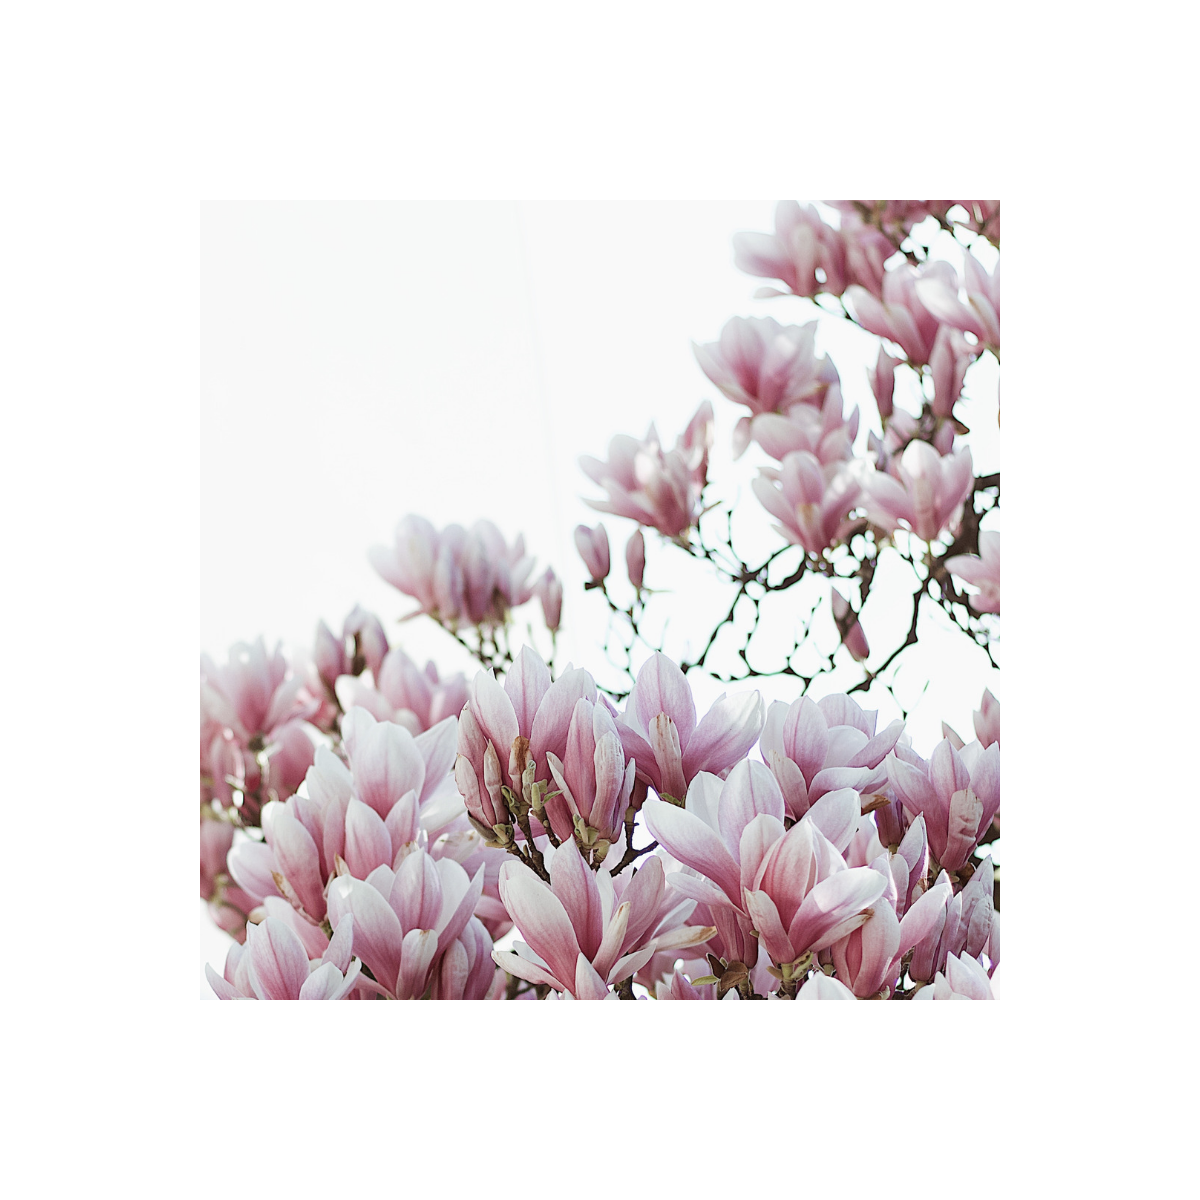 Fragrance Magnolia (Grasse) sans allergène